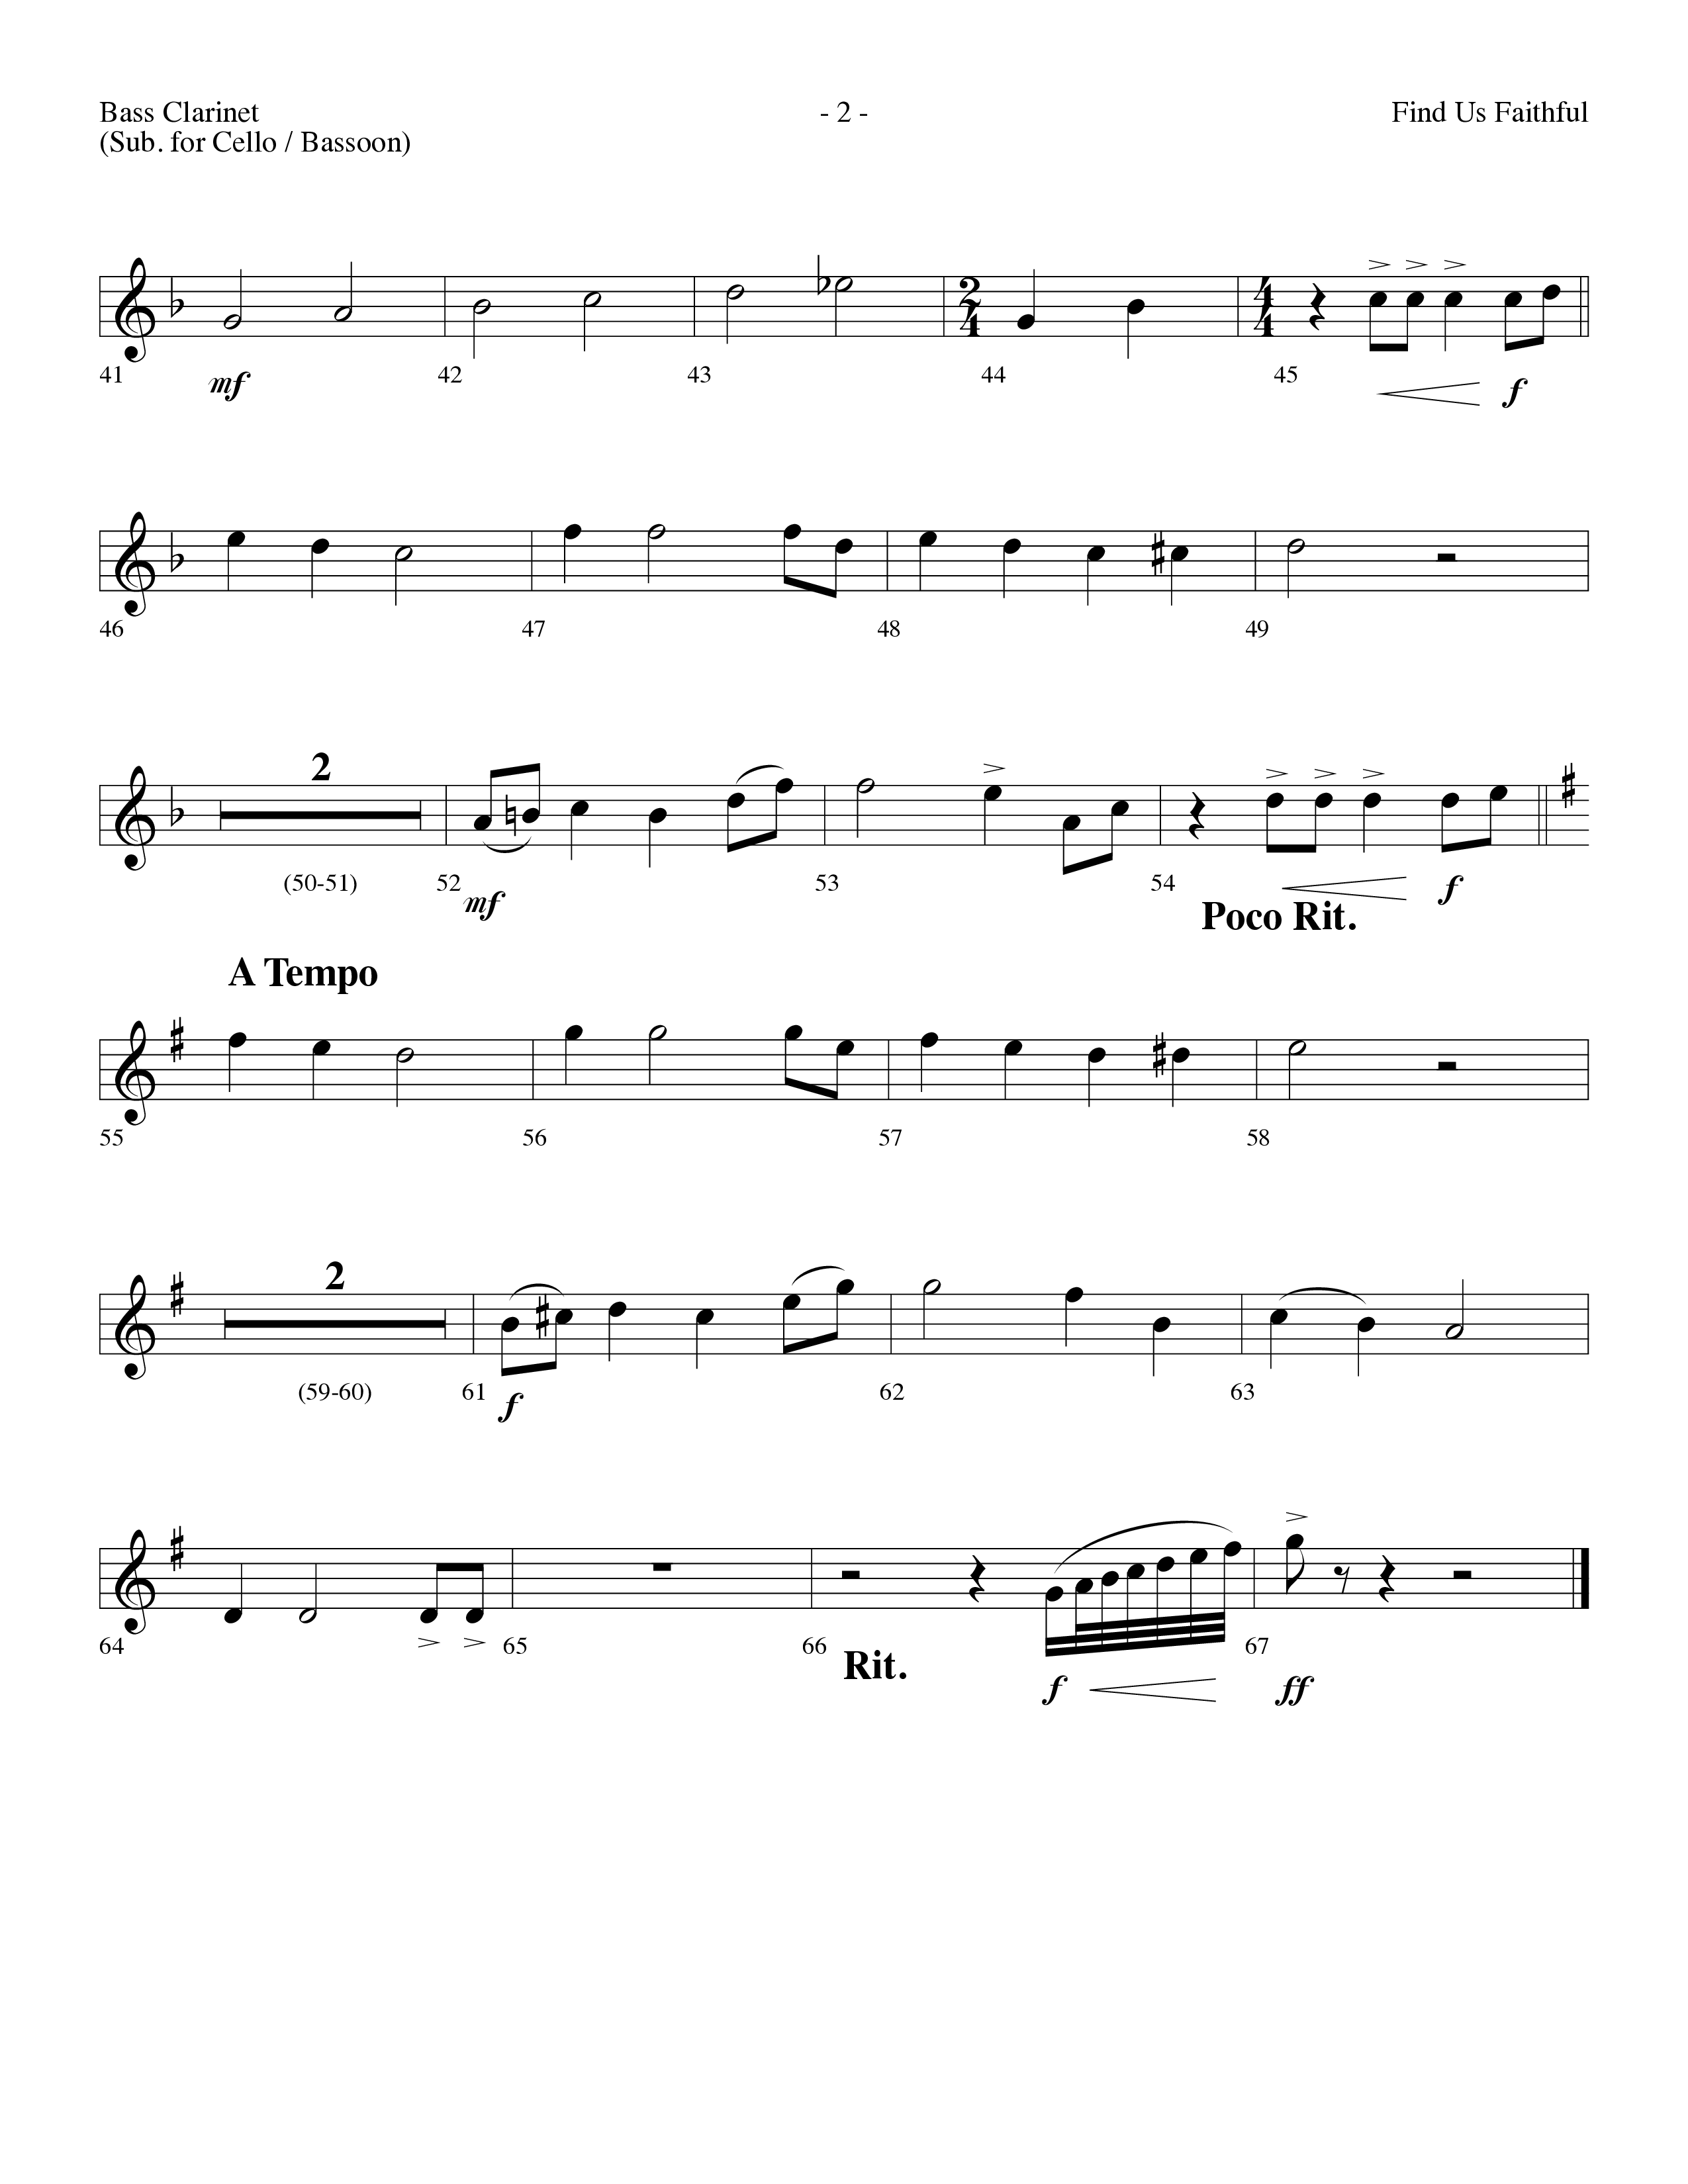 Find Us Faithful (Choral Anthem SATB) Bass Clarinet (Lifeway Choral / Arr. Dennis Allen)